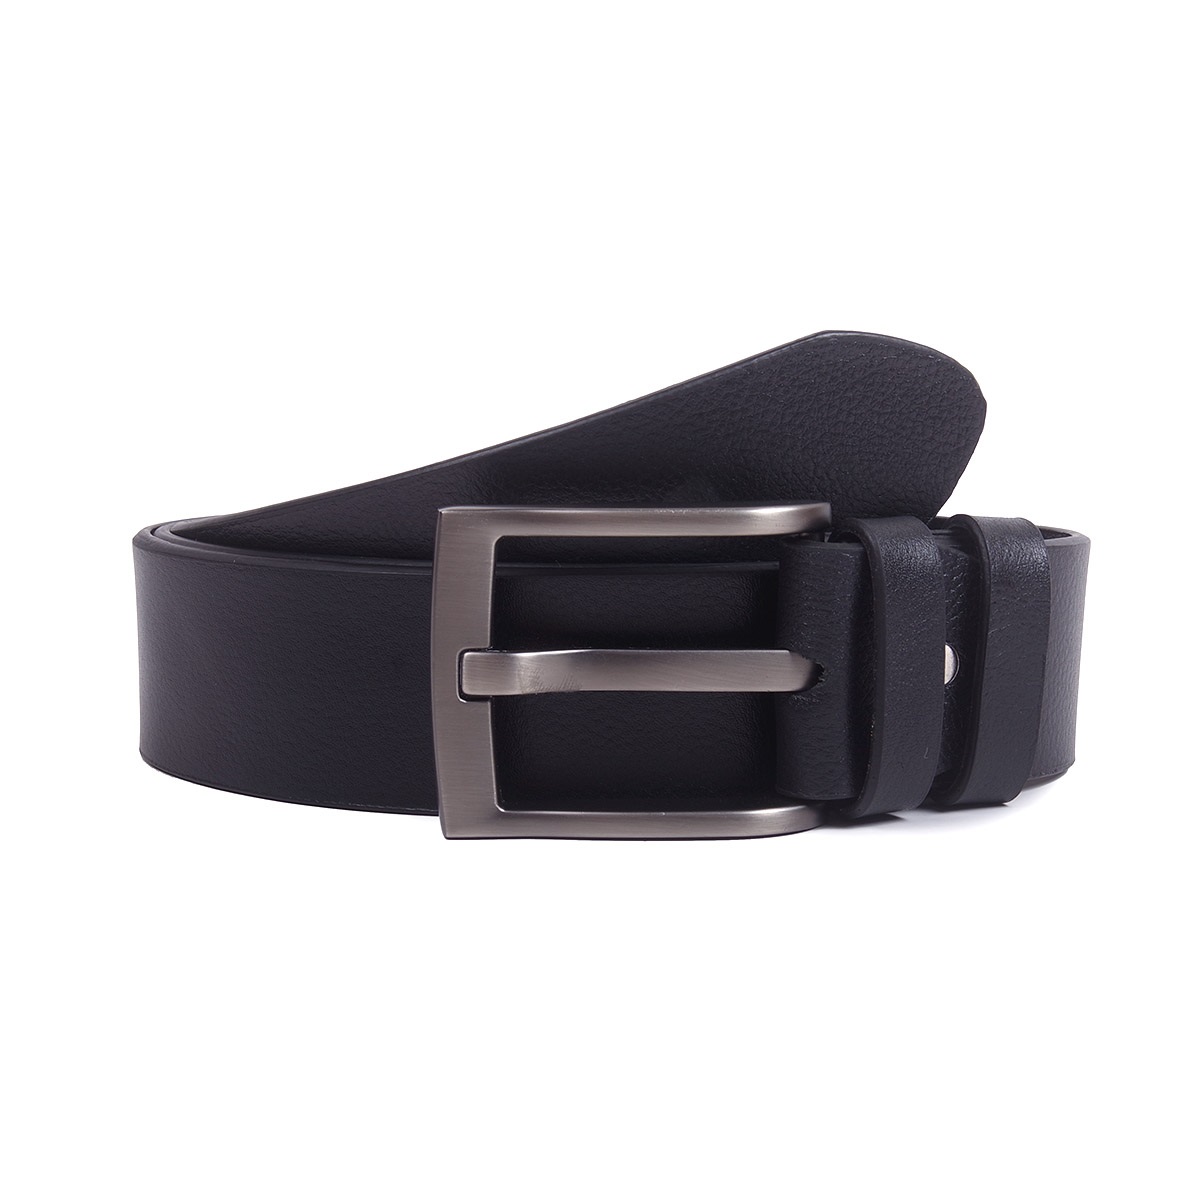 Premium Quality Men's Black Leather Belt for Male